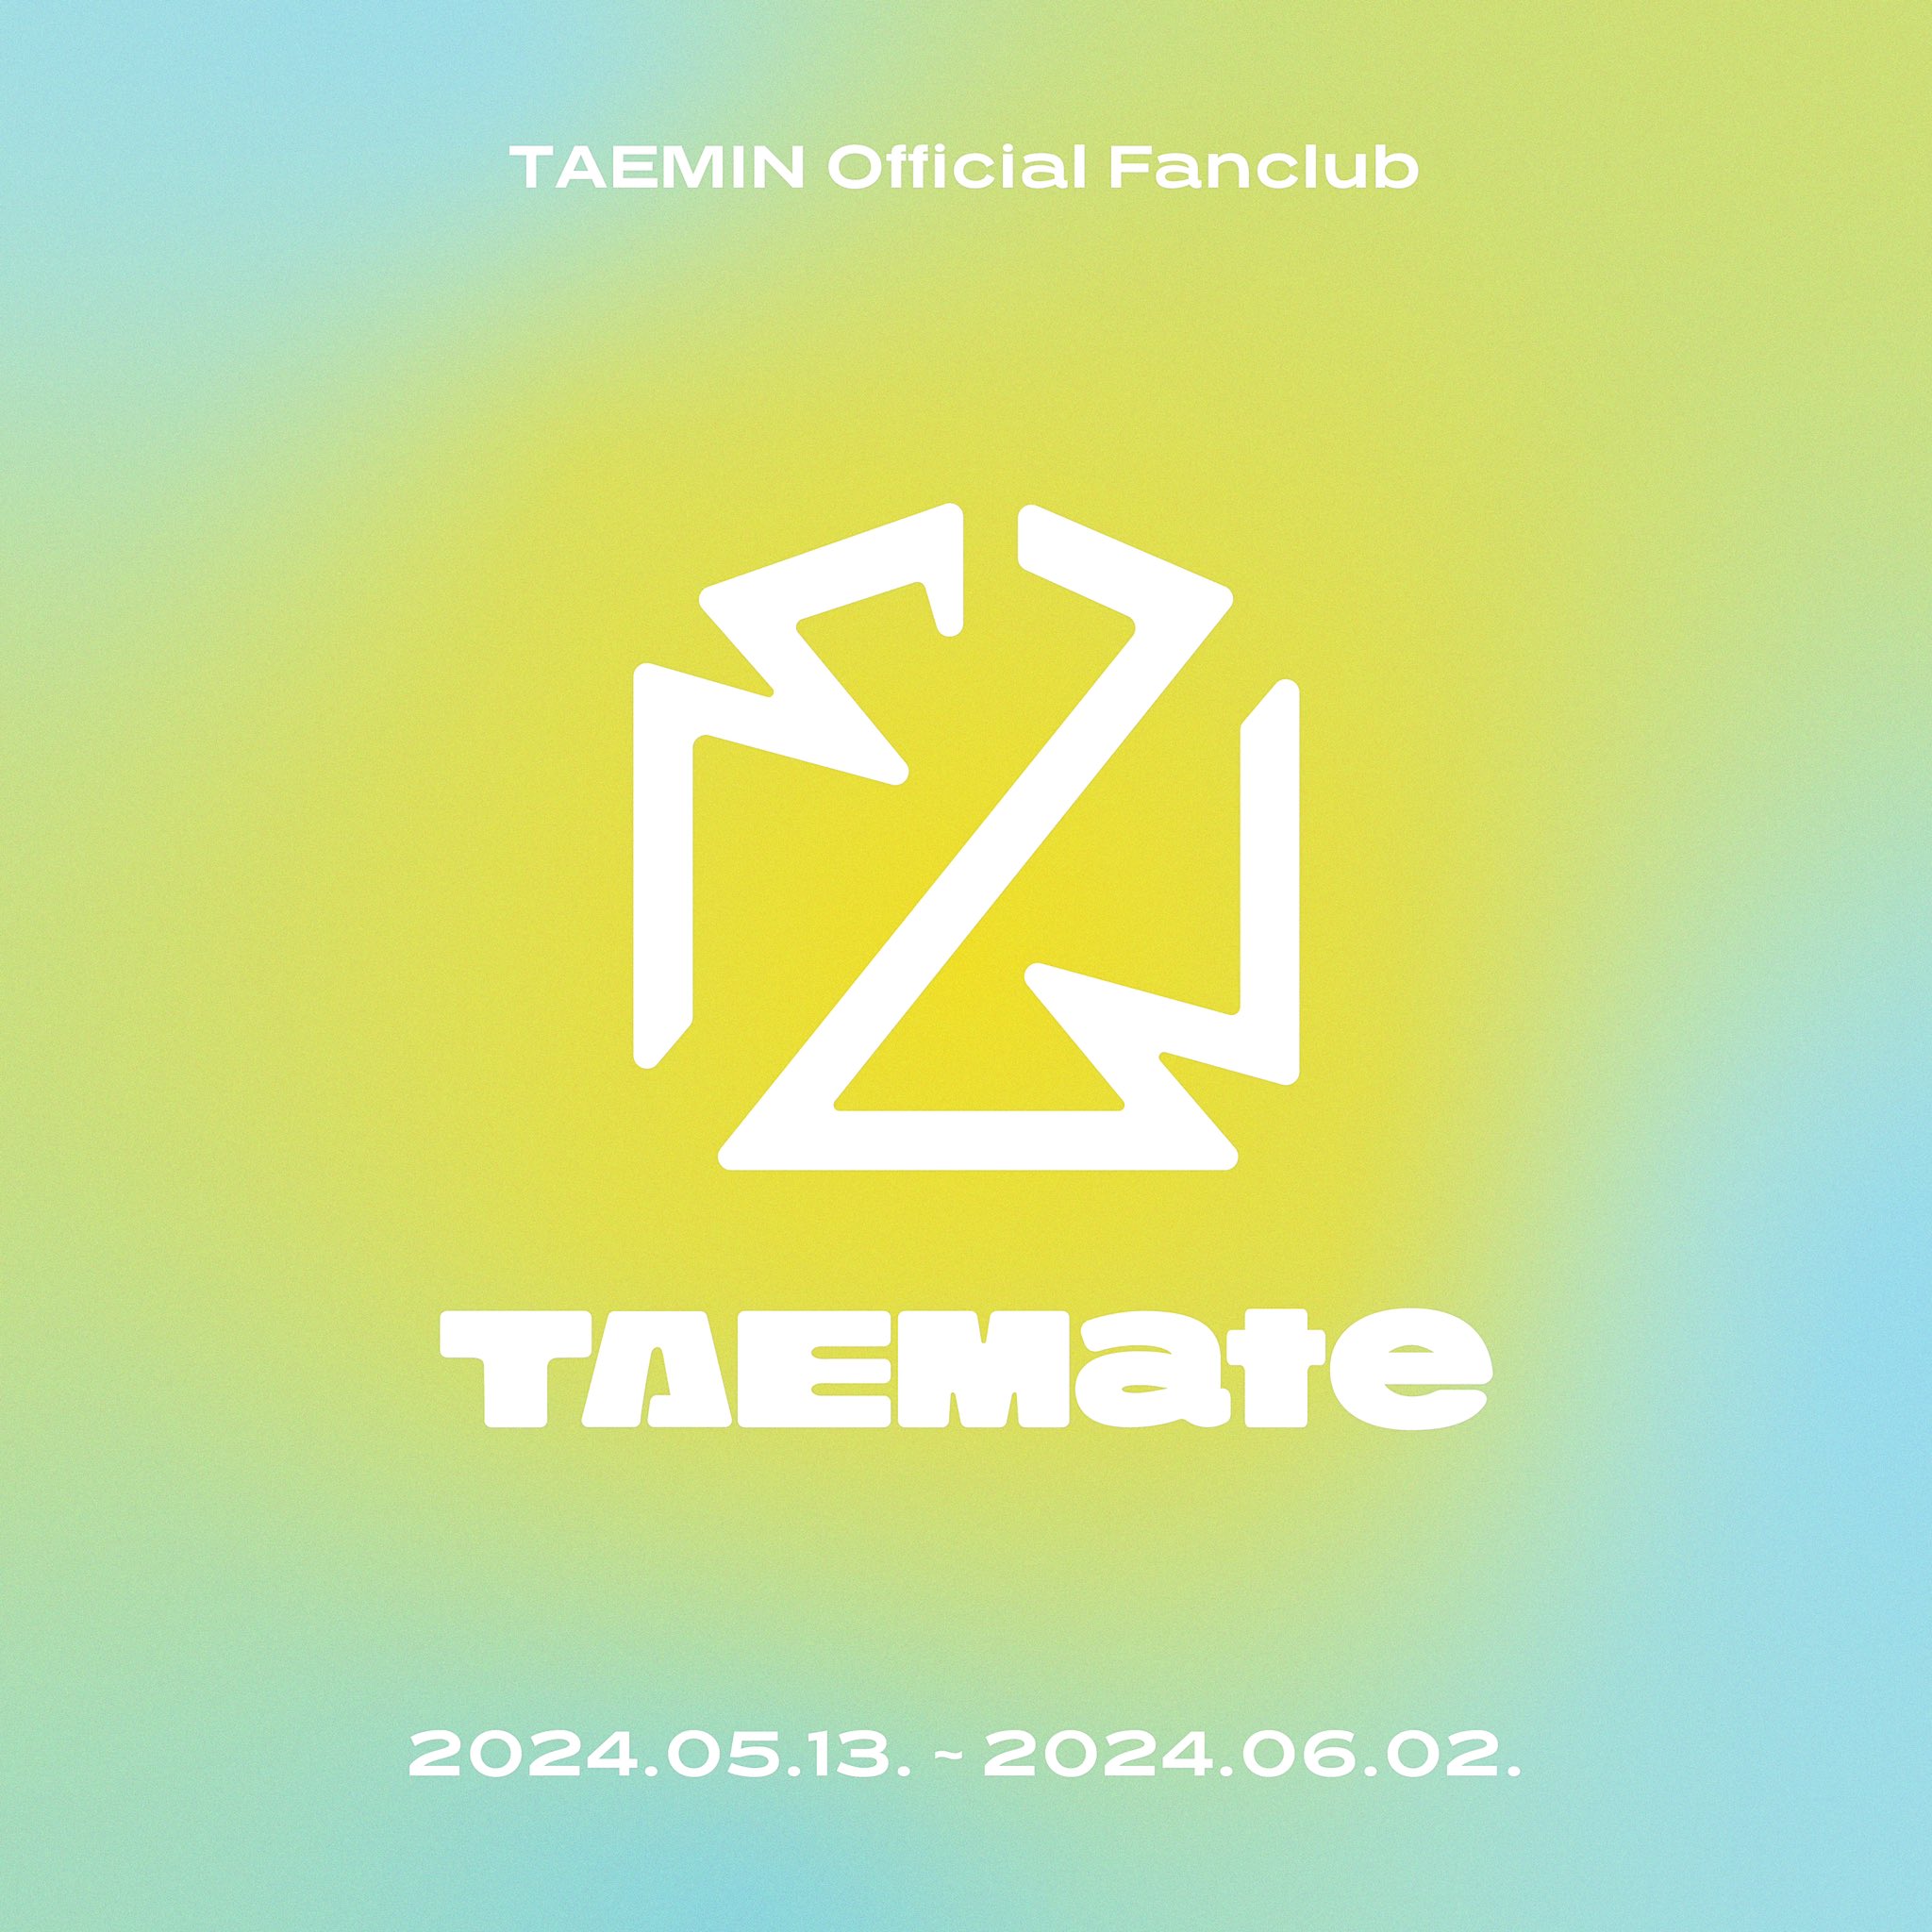 Tên fandom của Taemin là TAEMate (Ảnh: Internet)